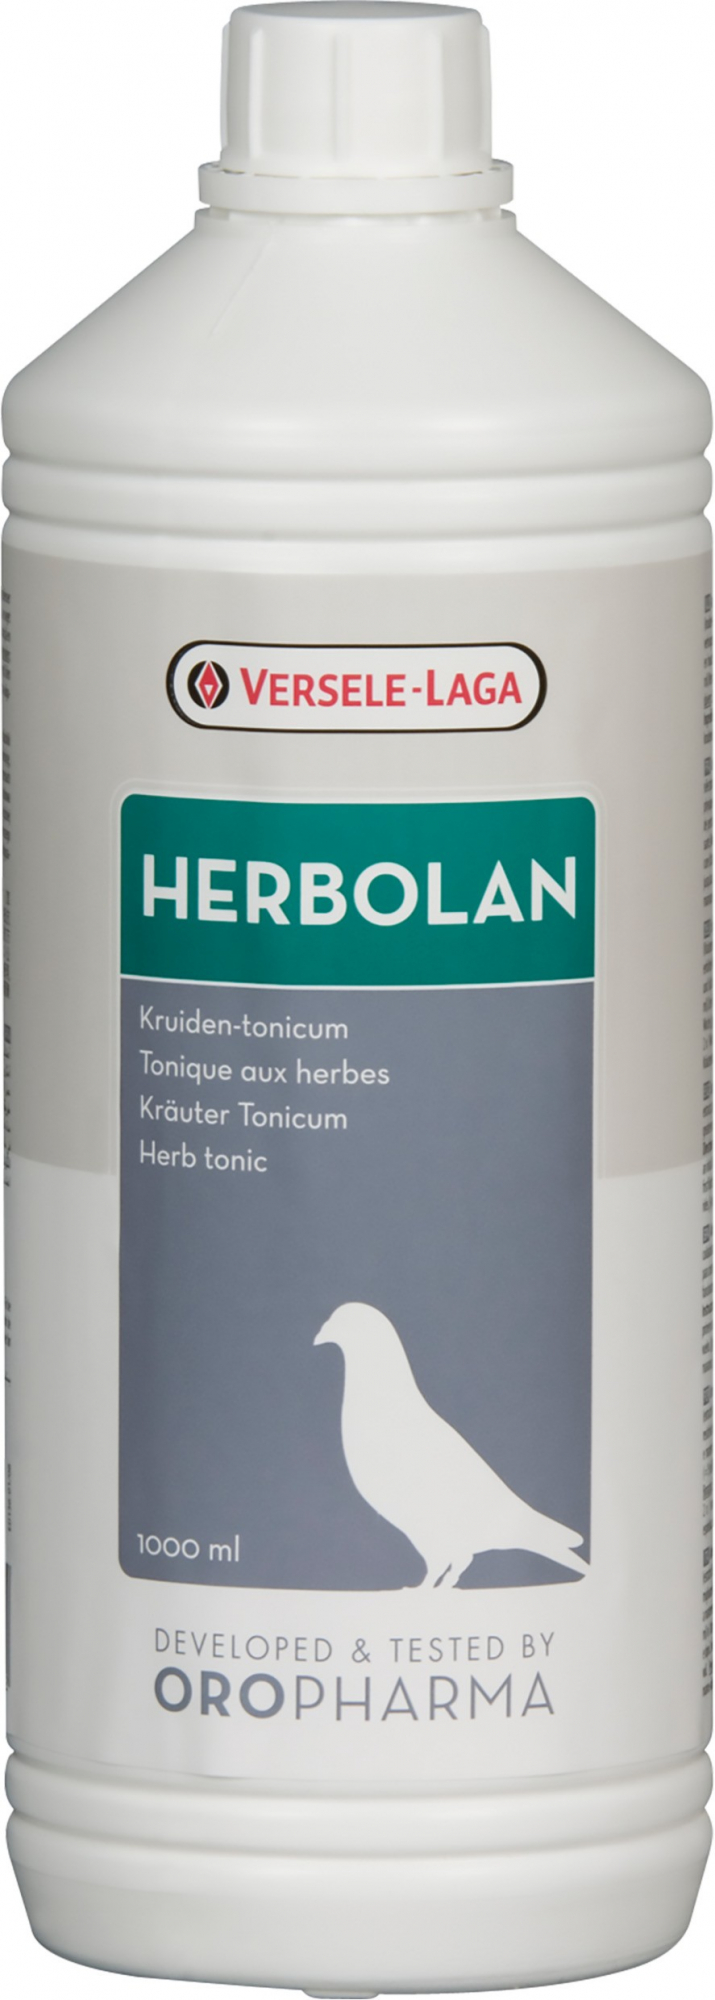 Oropharma Herbolan tónico herbal, fitness e resistência